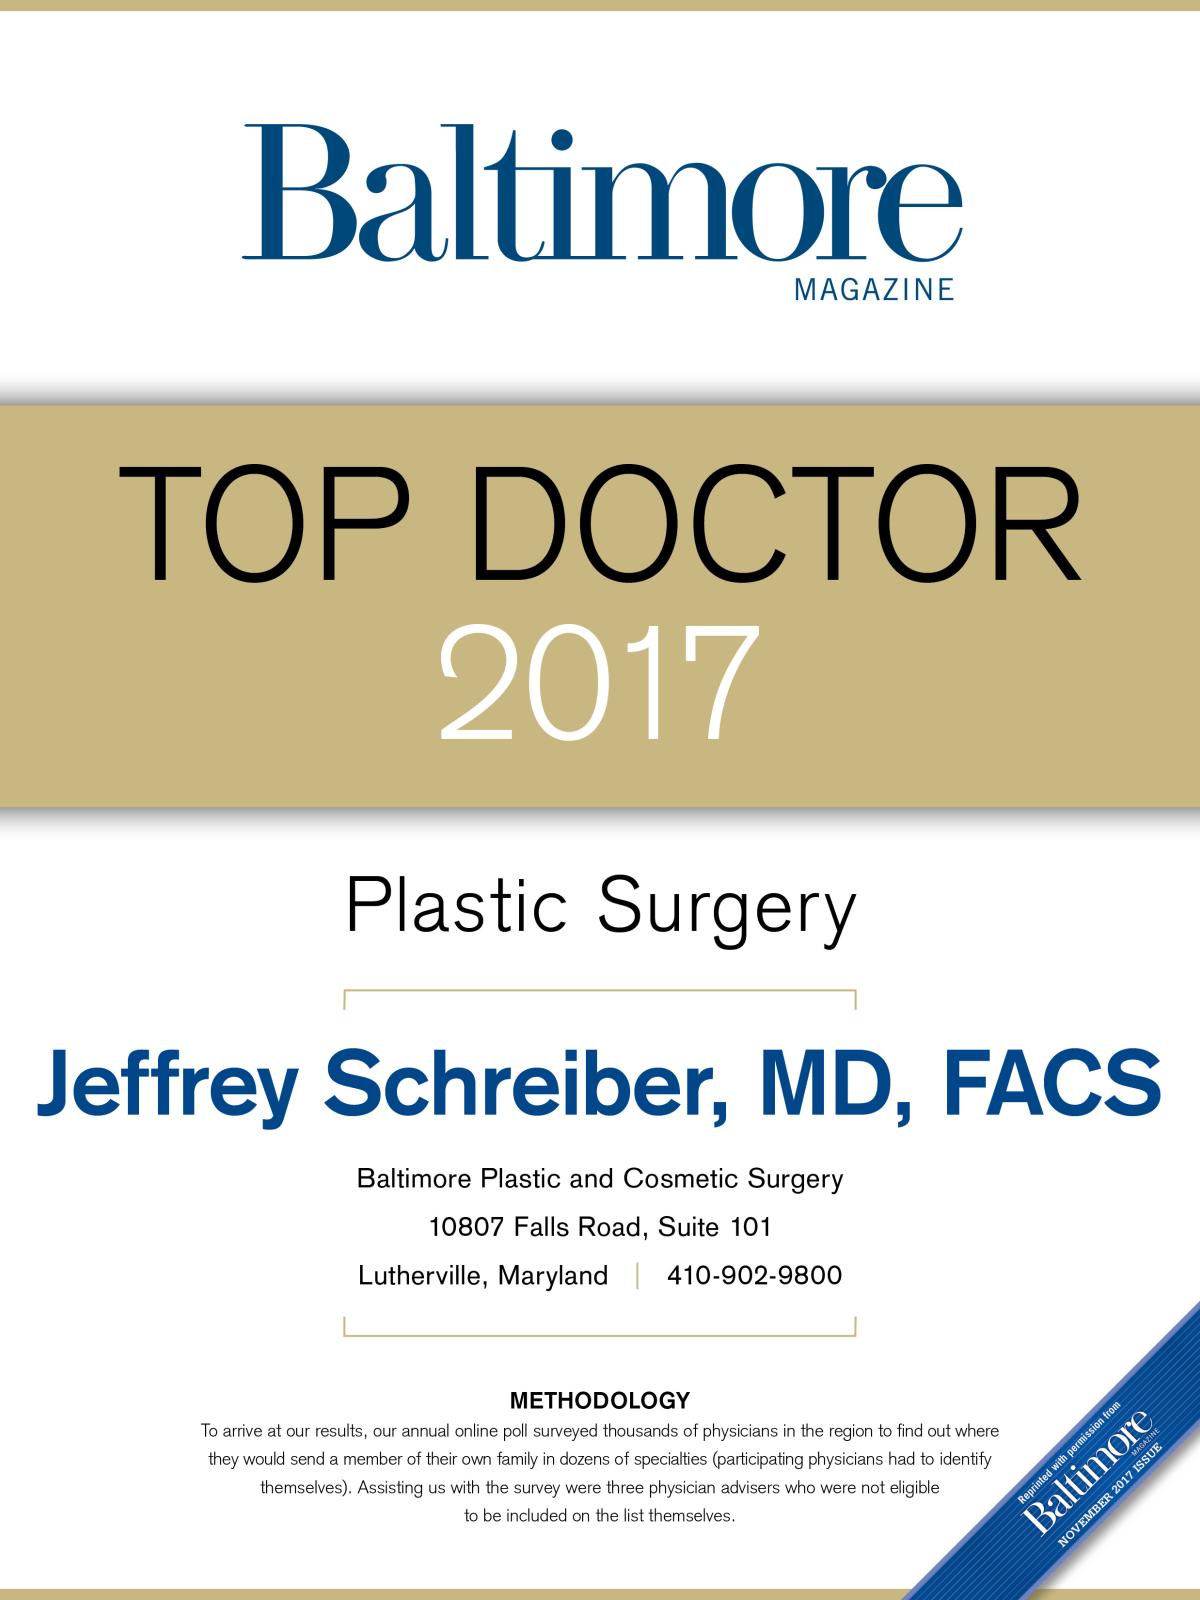 Jeffrey E. Schreiber, MD Professional Background Image